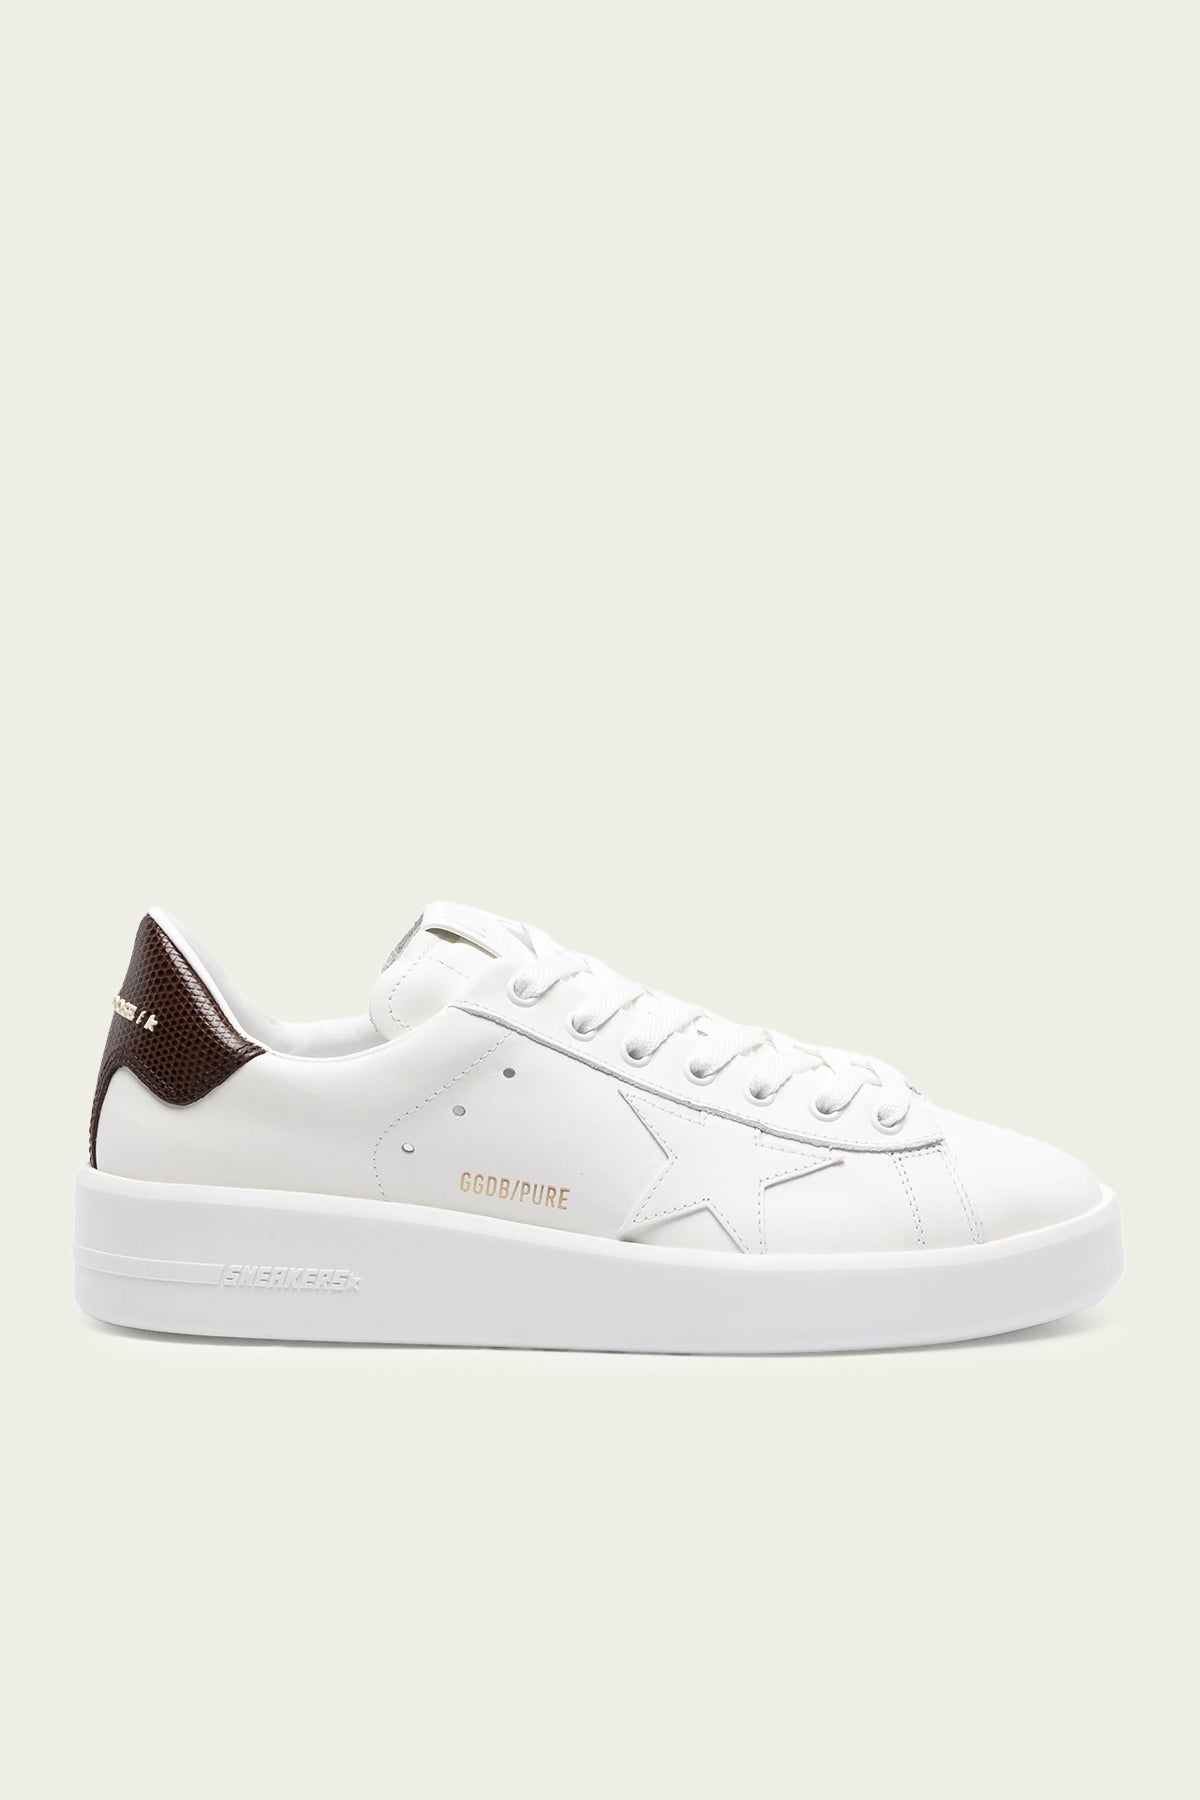 Pure-Star Burgundy Back White Leather Men Sneaker - shop-olivia.com